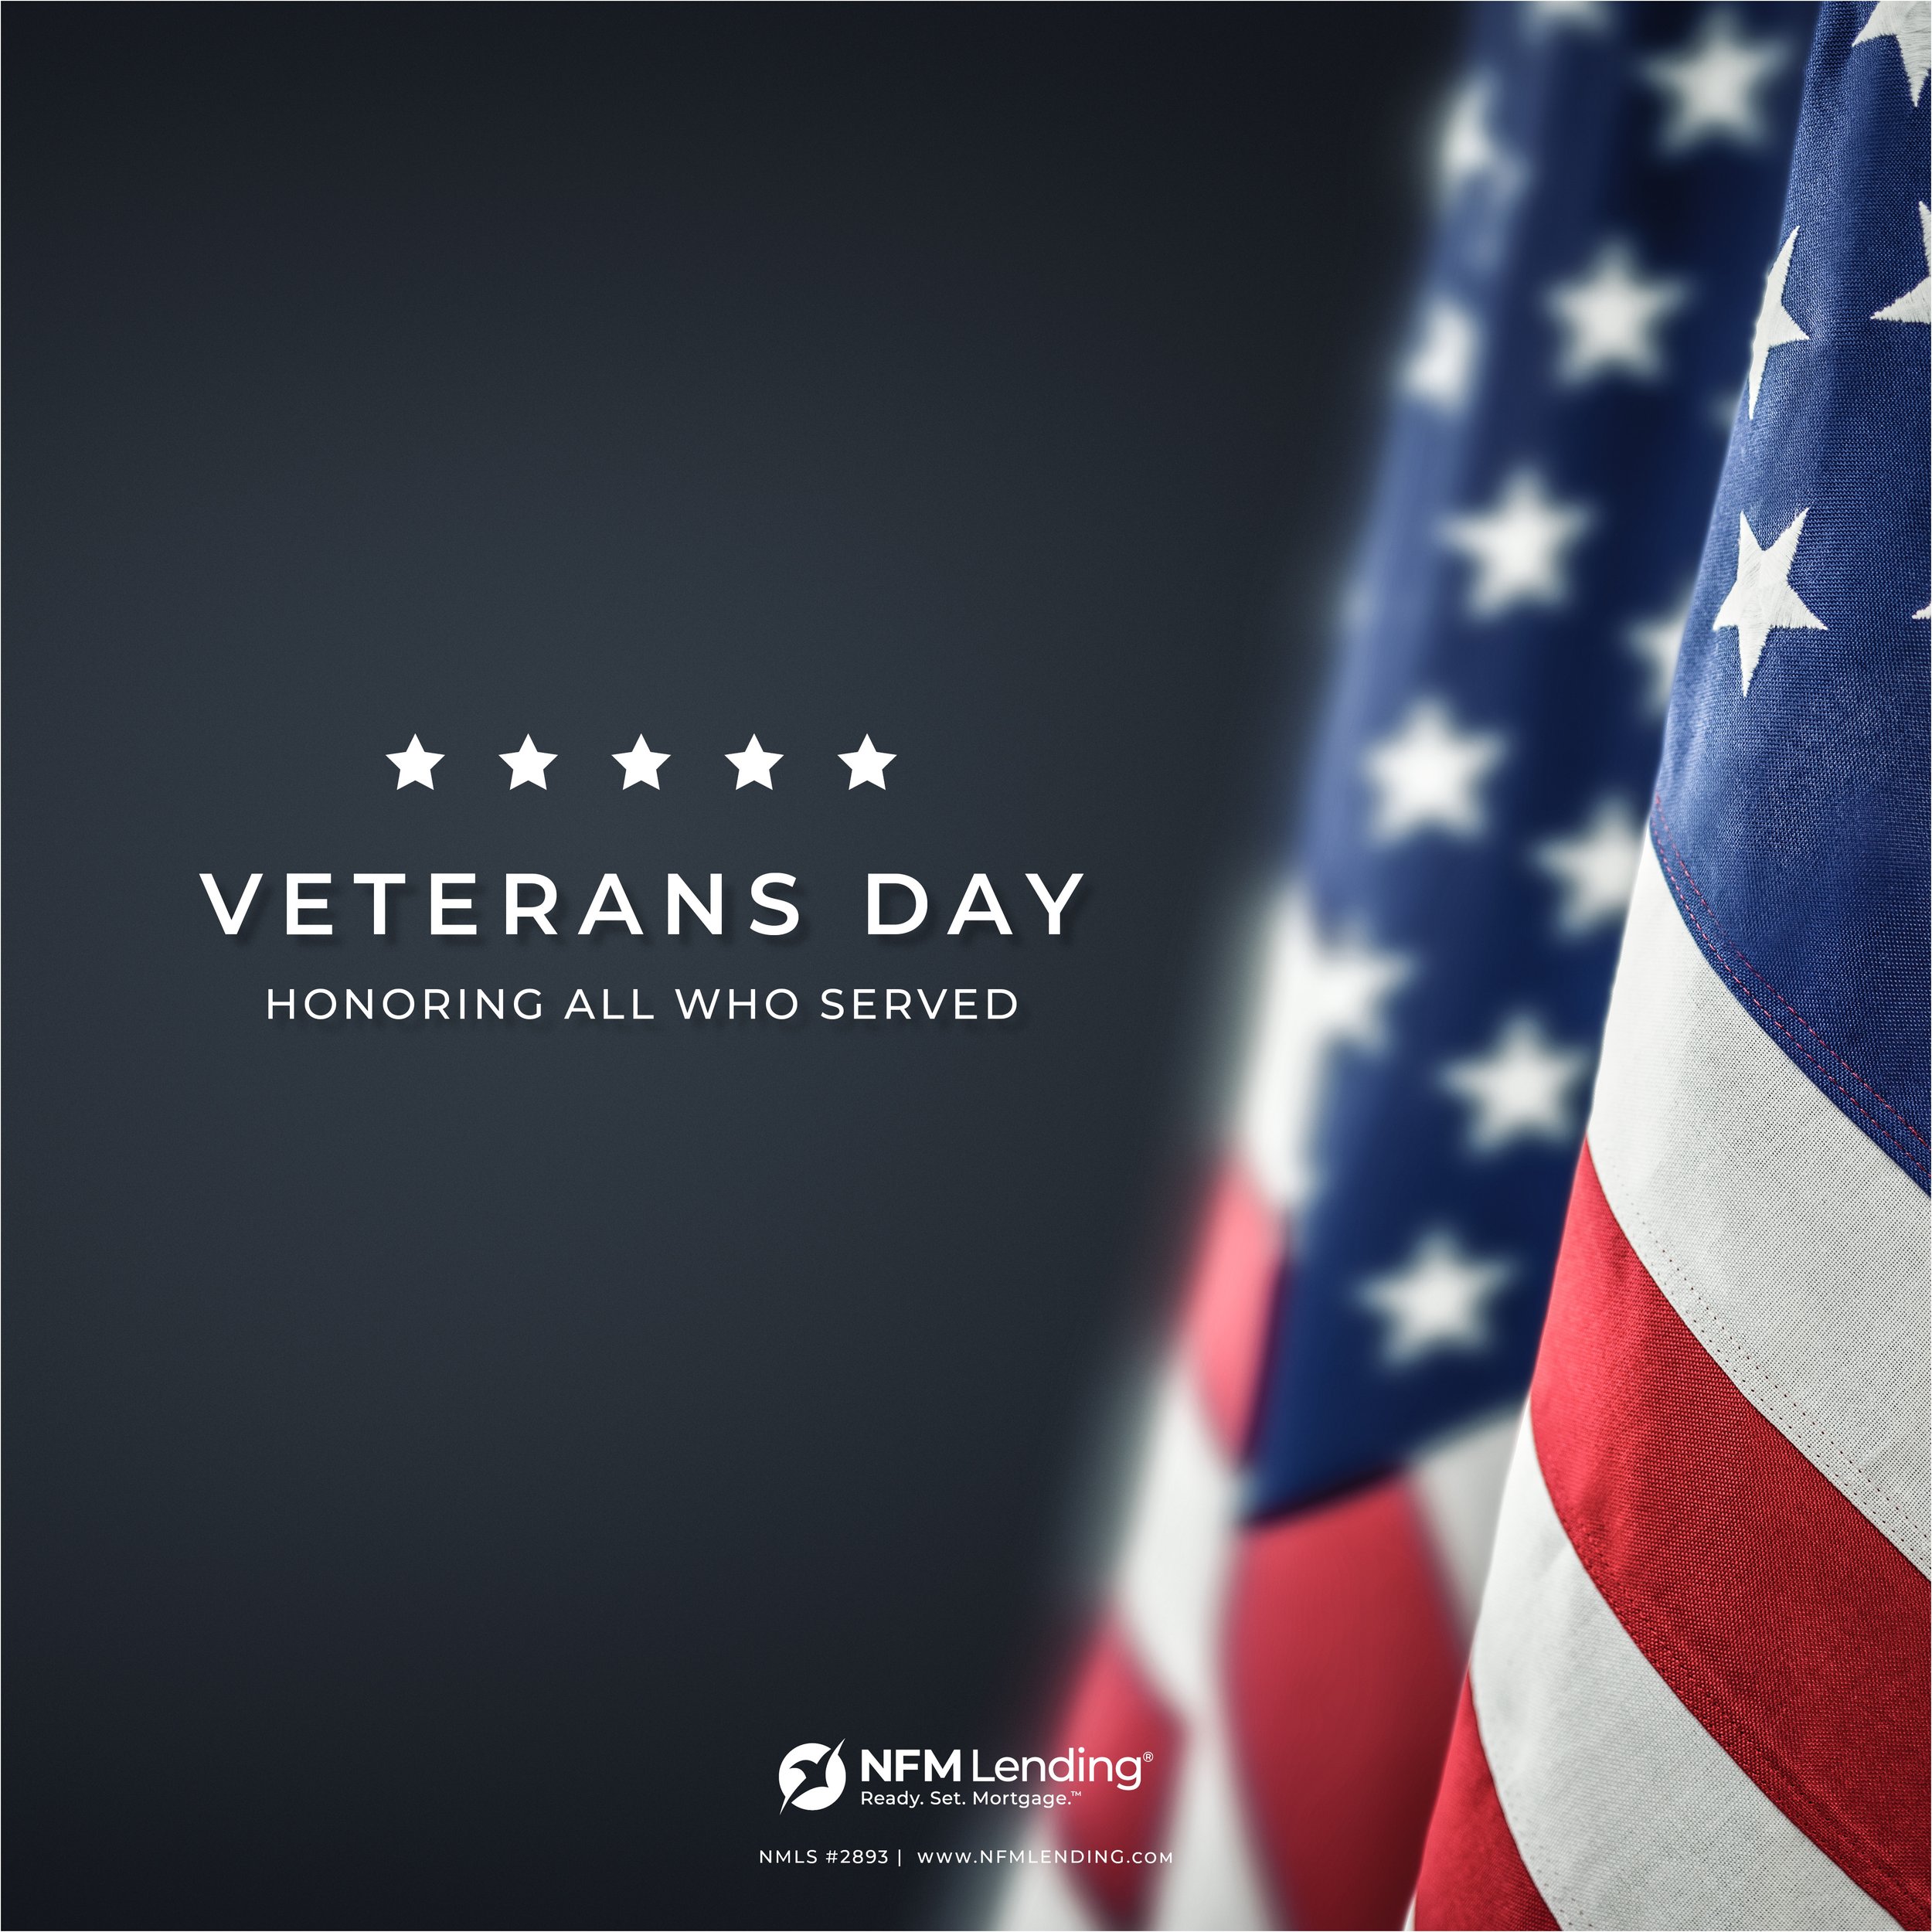 Veterans Day_SocialMedia_11.2021_CORP.jpg